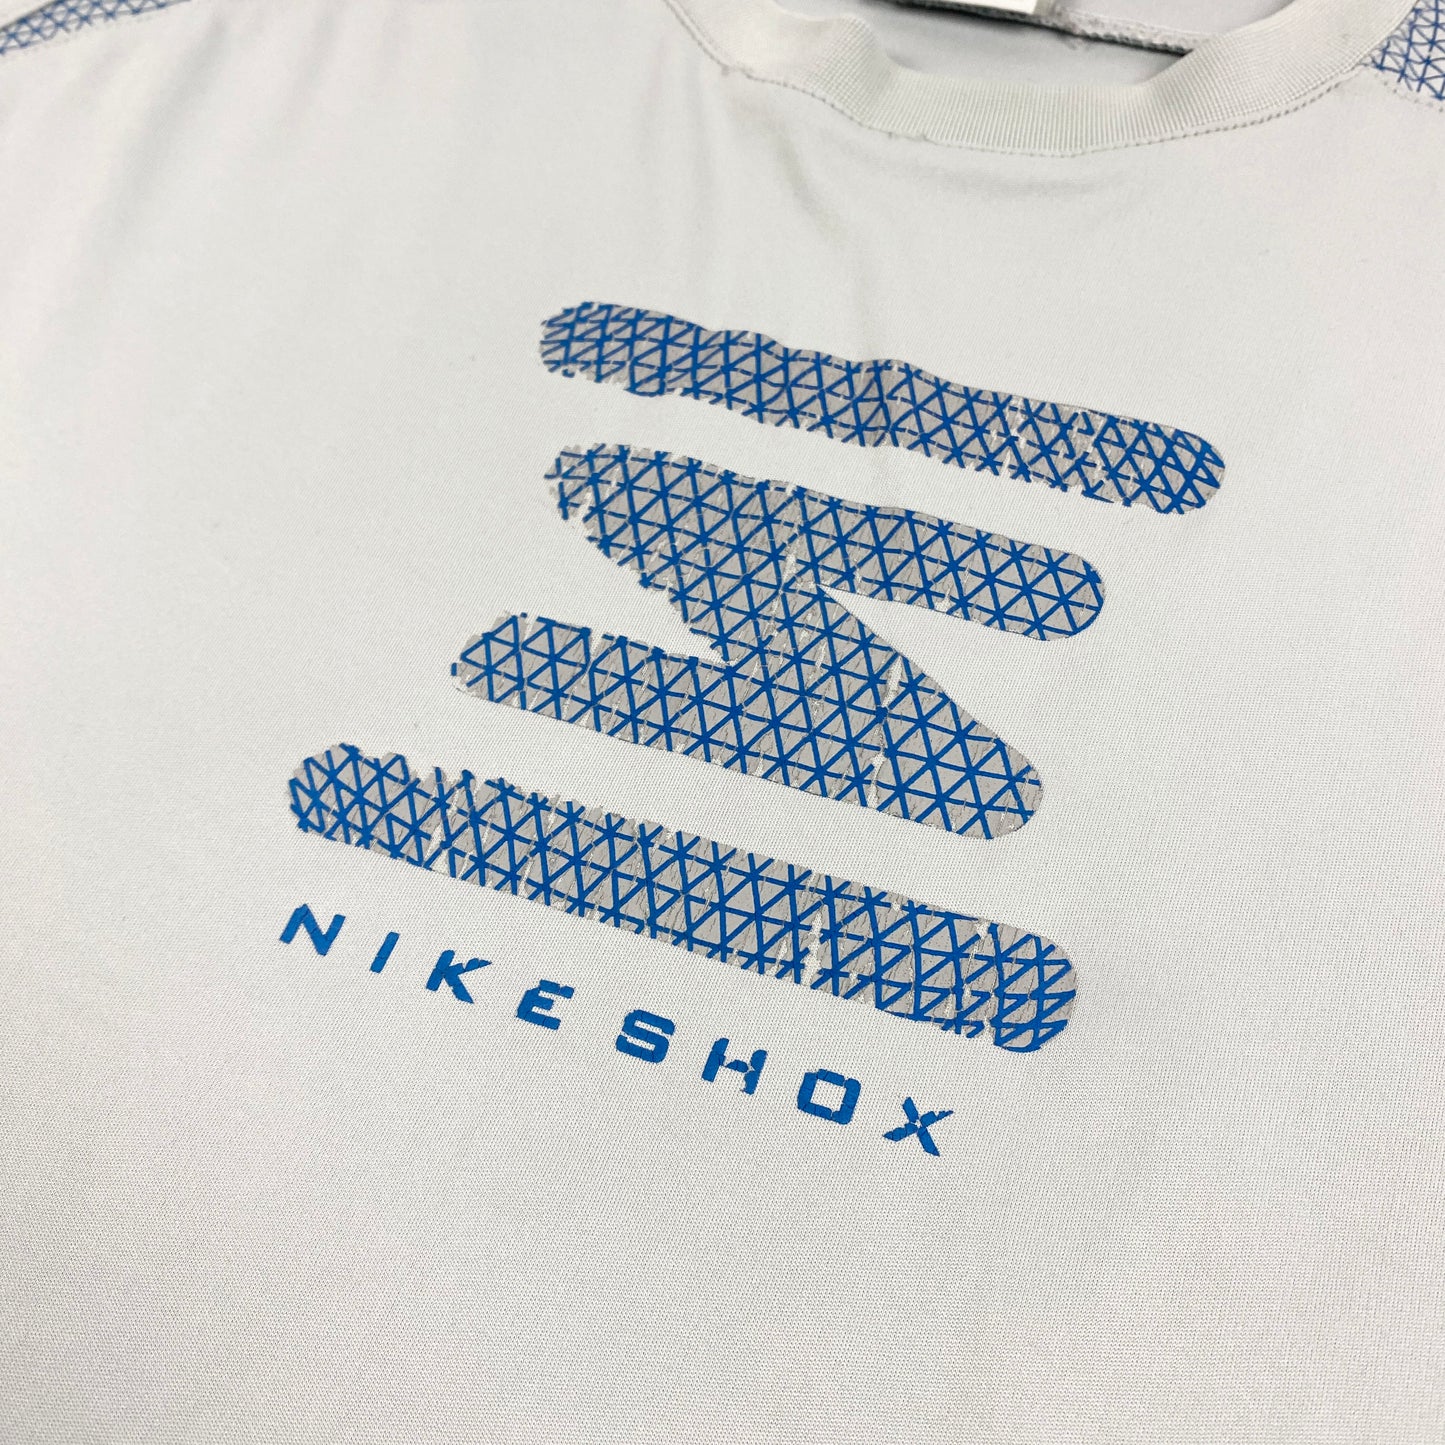 Vintage NIKE SHOX Logo T-Shirt